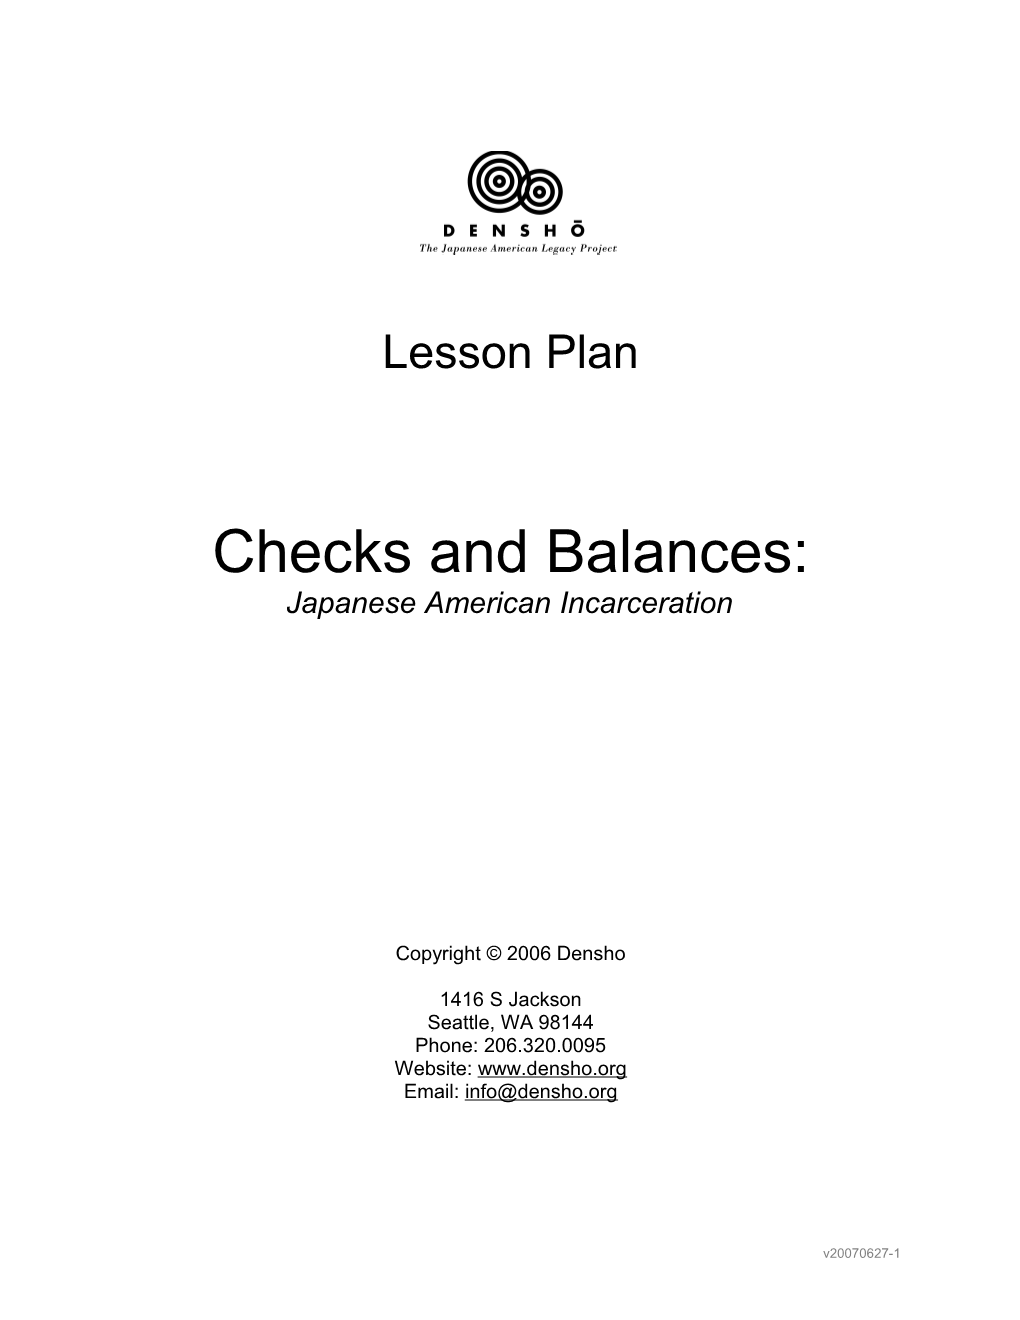 Densho Civil Liberties Curriculum - Checks and Balances: Japanese American Incarceration